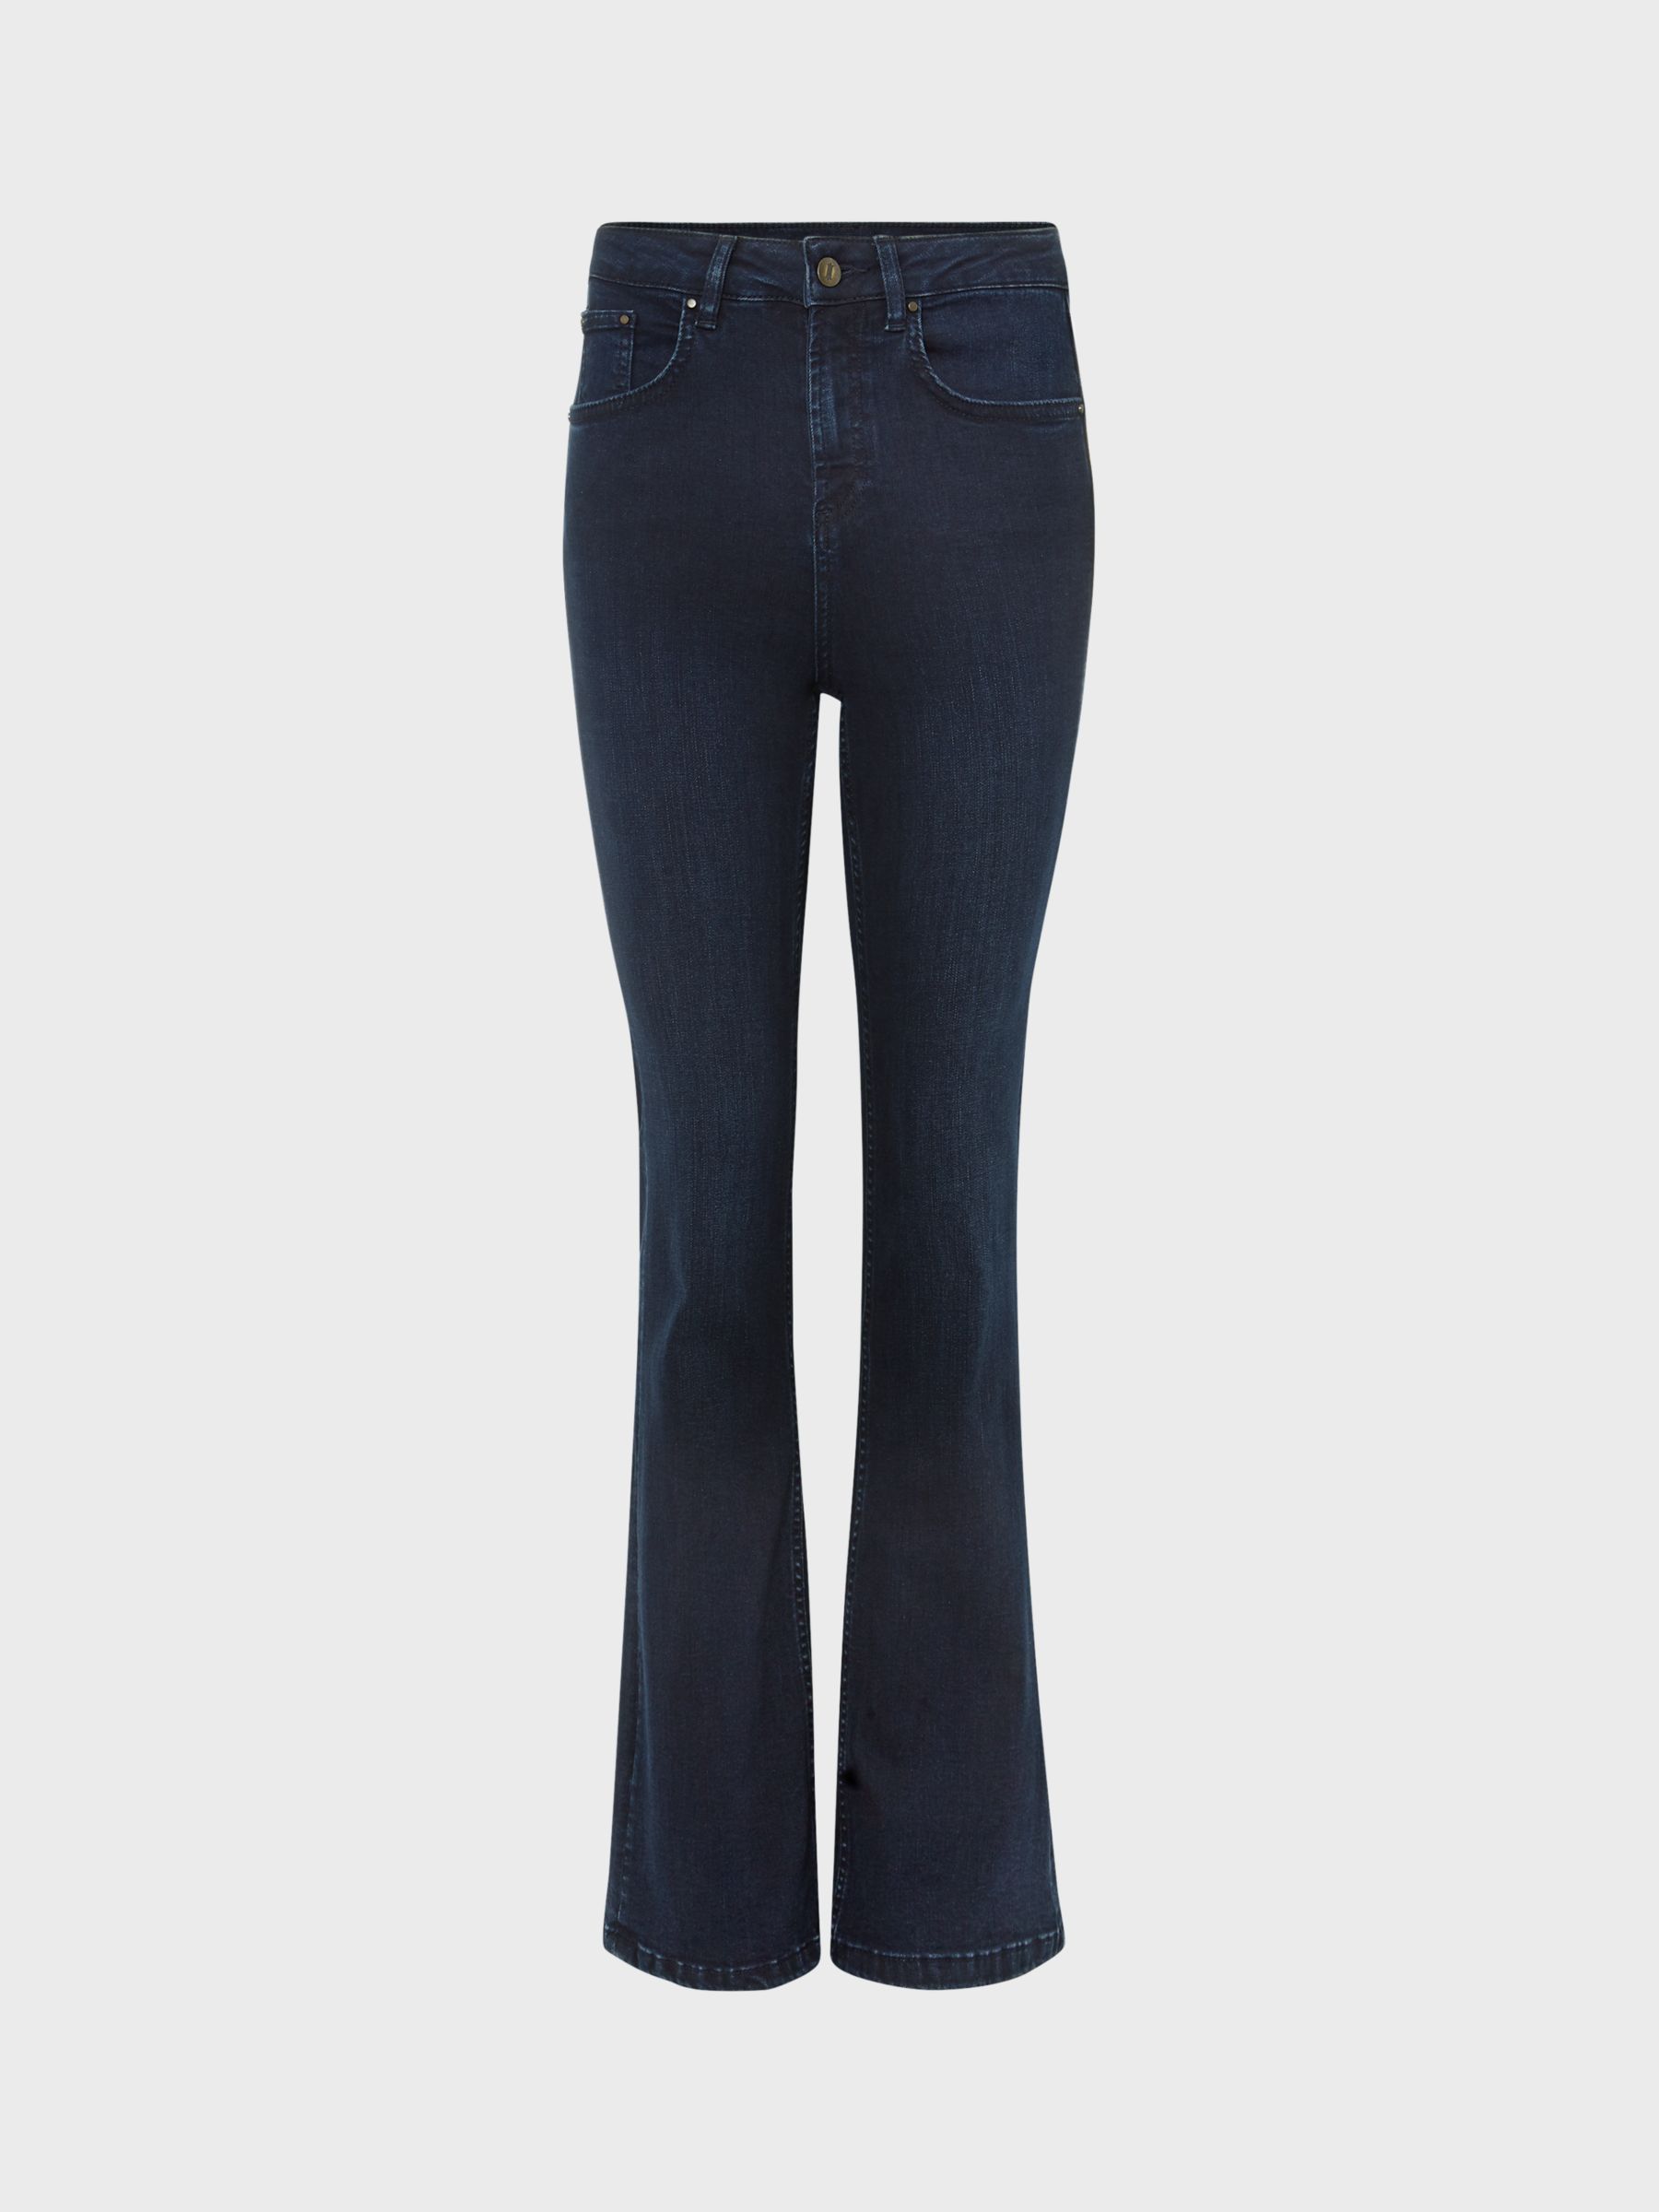 Buy Hobbs Niomi Bootcut Jeans, Indigo Online at johnlewis.com